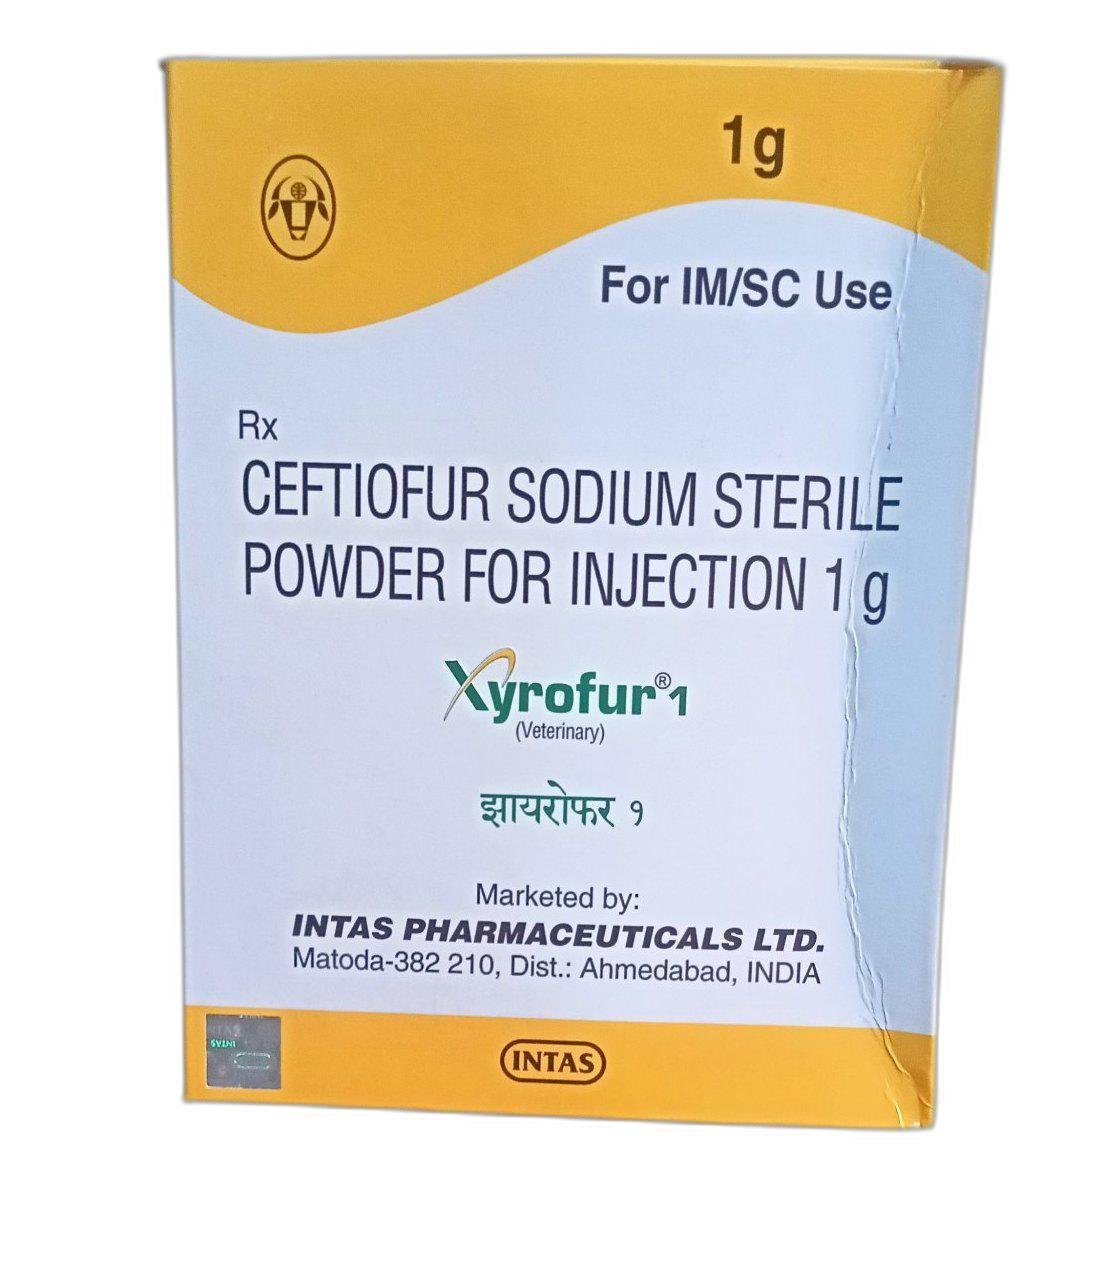 Ceftiofur Sodium Sterile Powder For Injection 1g